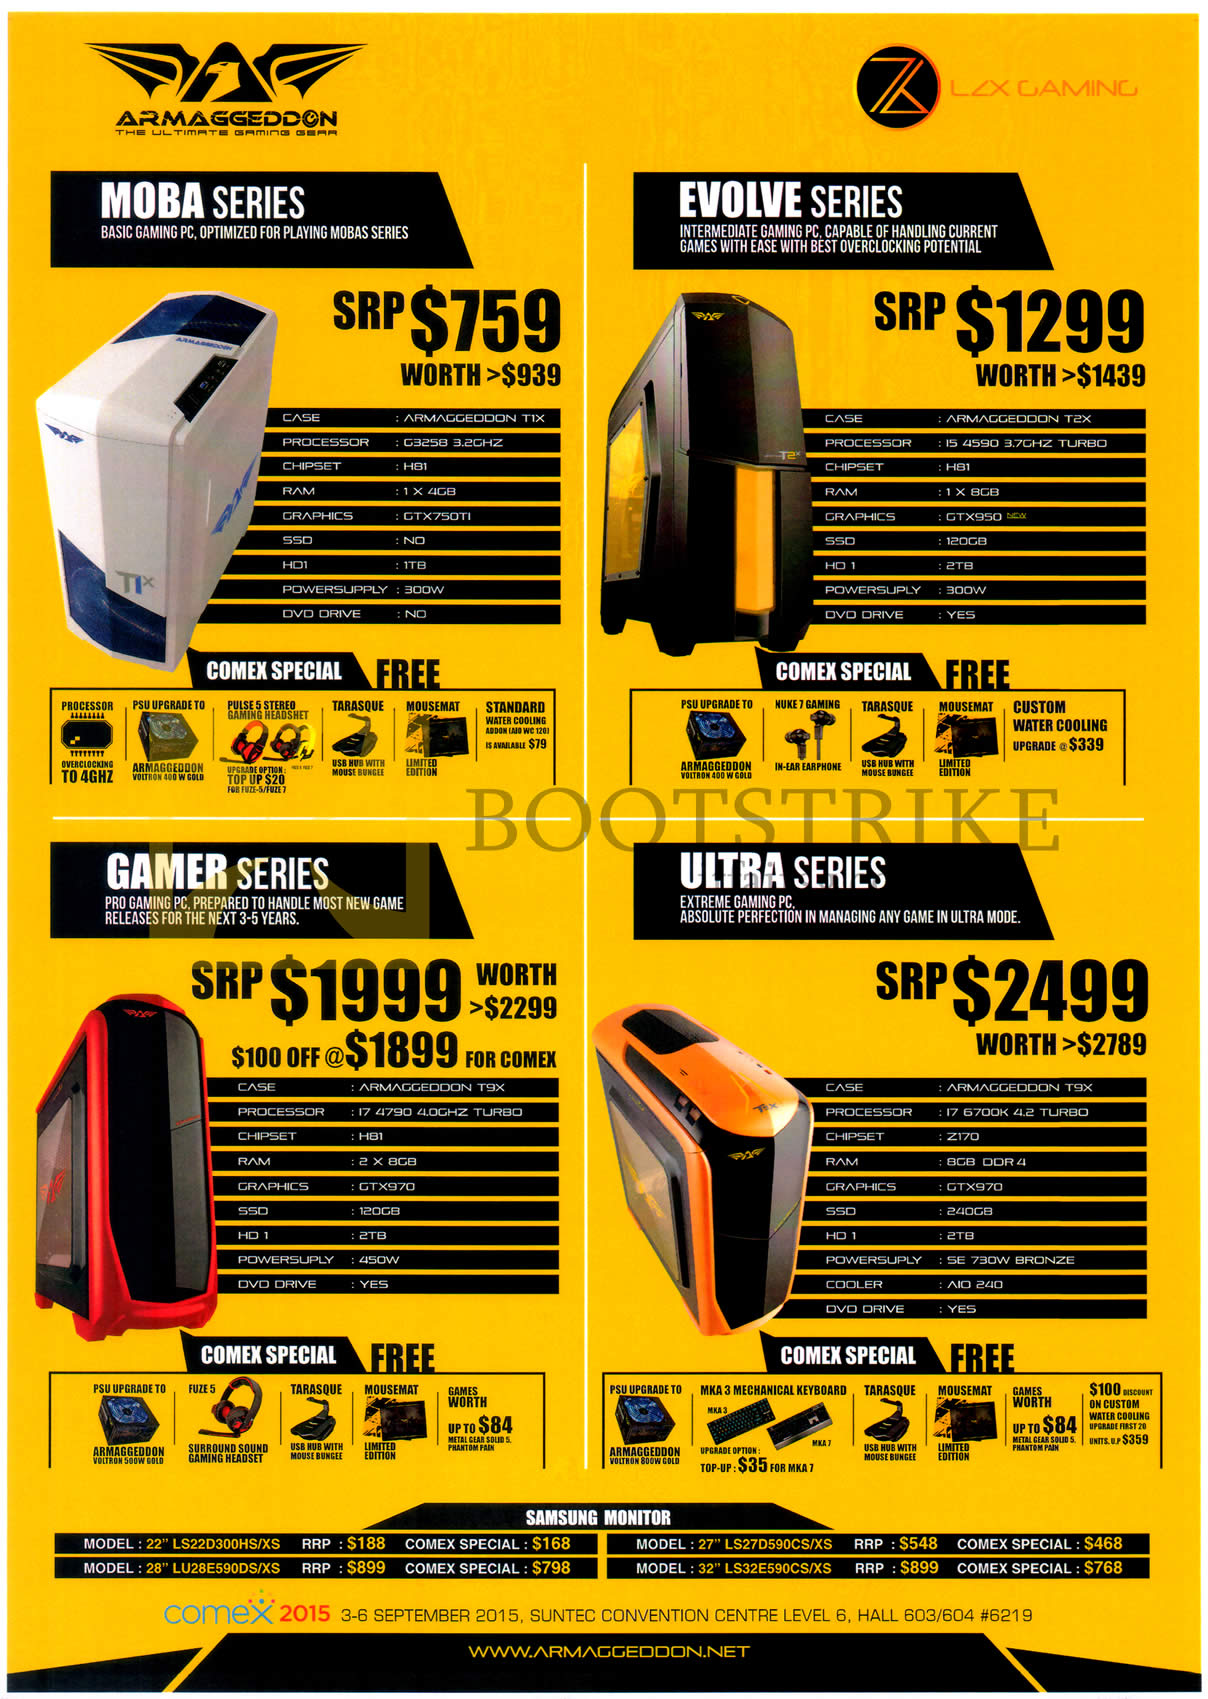 COMEX 2015 price list image brochure of Armageddon Desktop PCs Moba, Evolve, Gamer, Ultra Series, Samsung Monitor